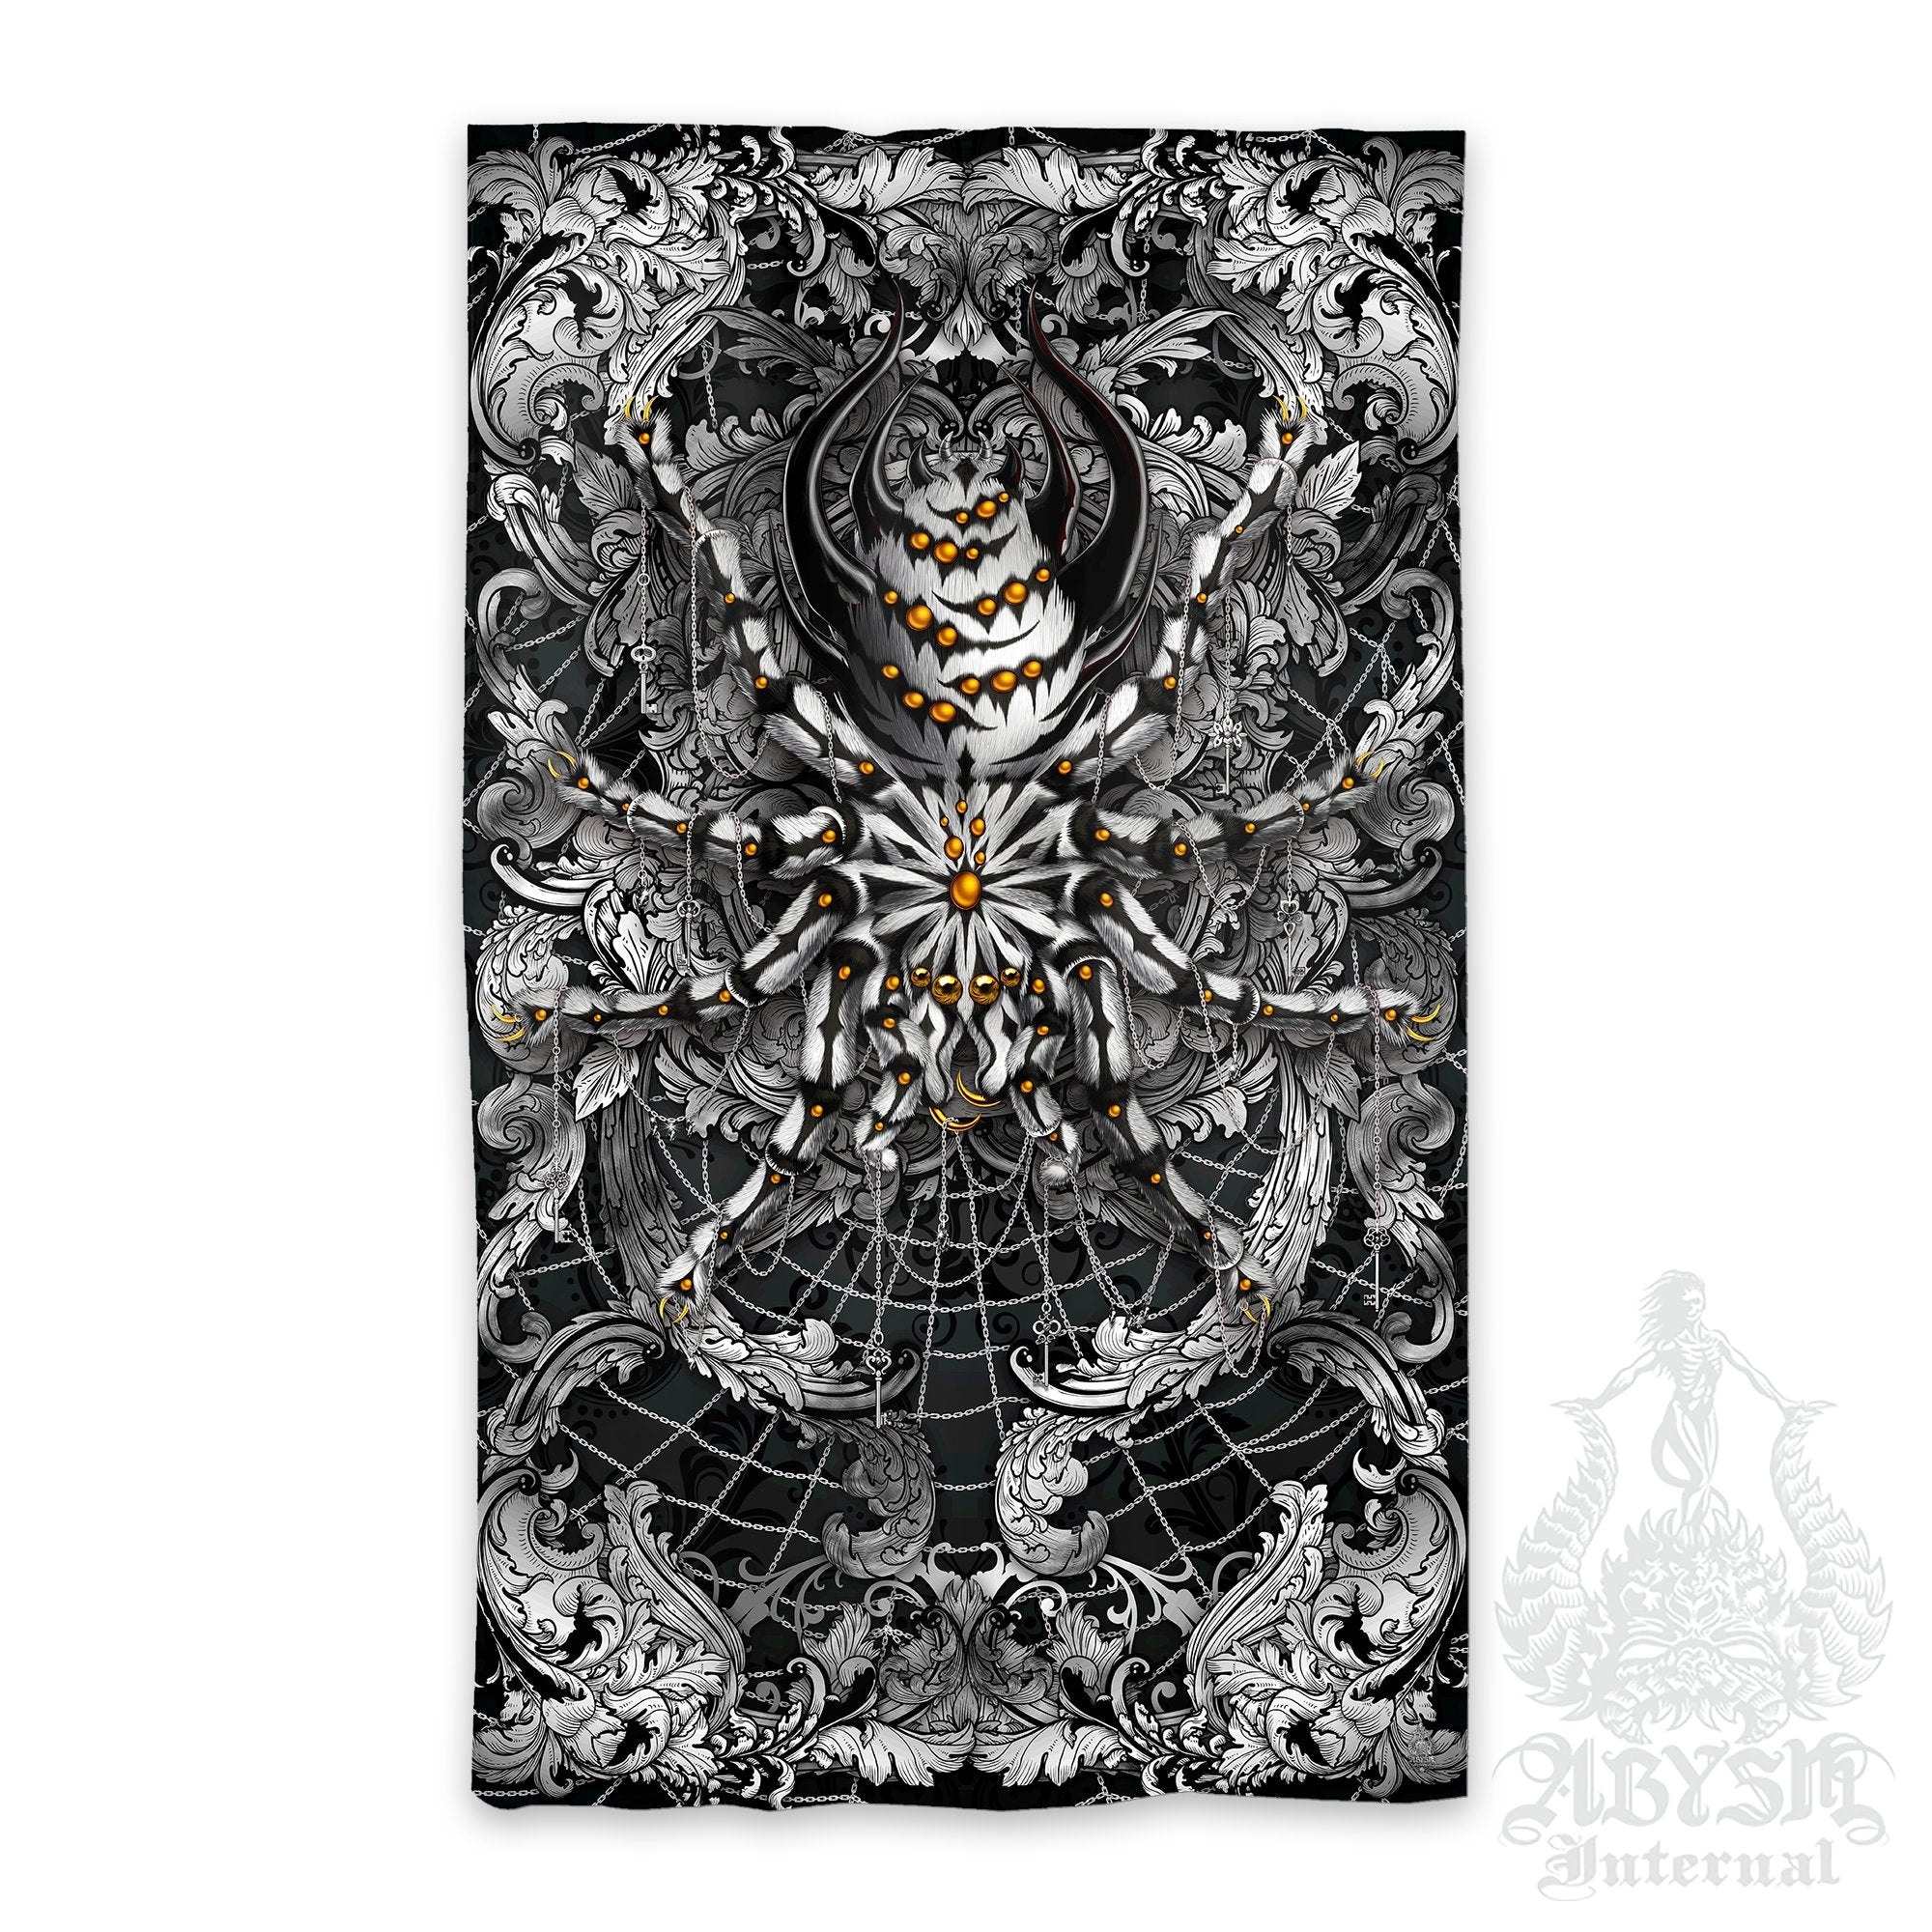 Spider Blackout Curtains, Long Window Panels, Goth Art Print, Fantasy Room Decor - Tarantula, Silver Black - Abysm Internal